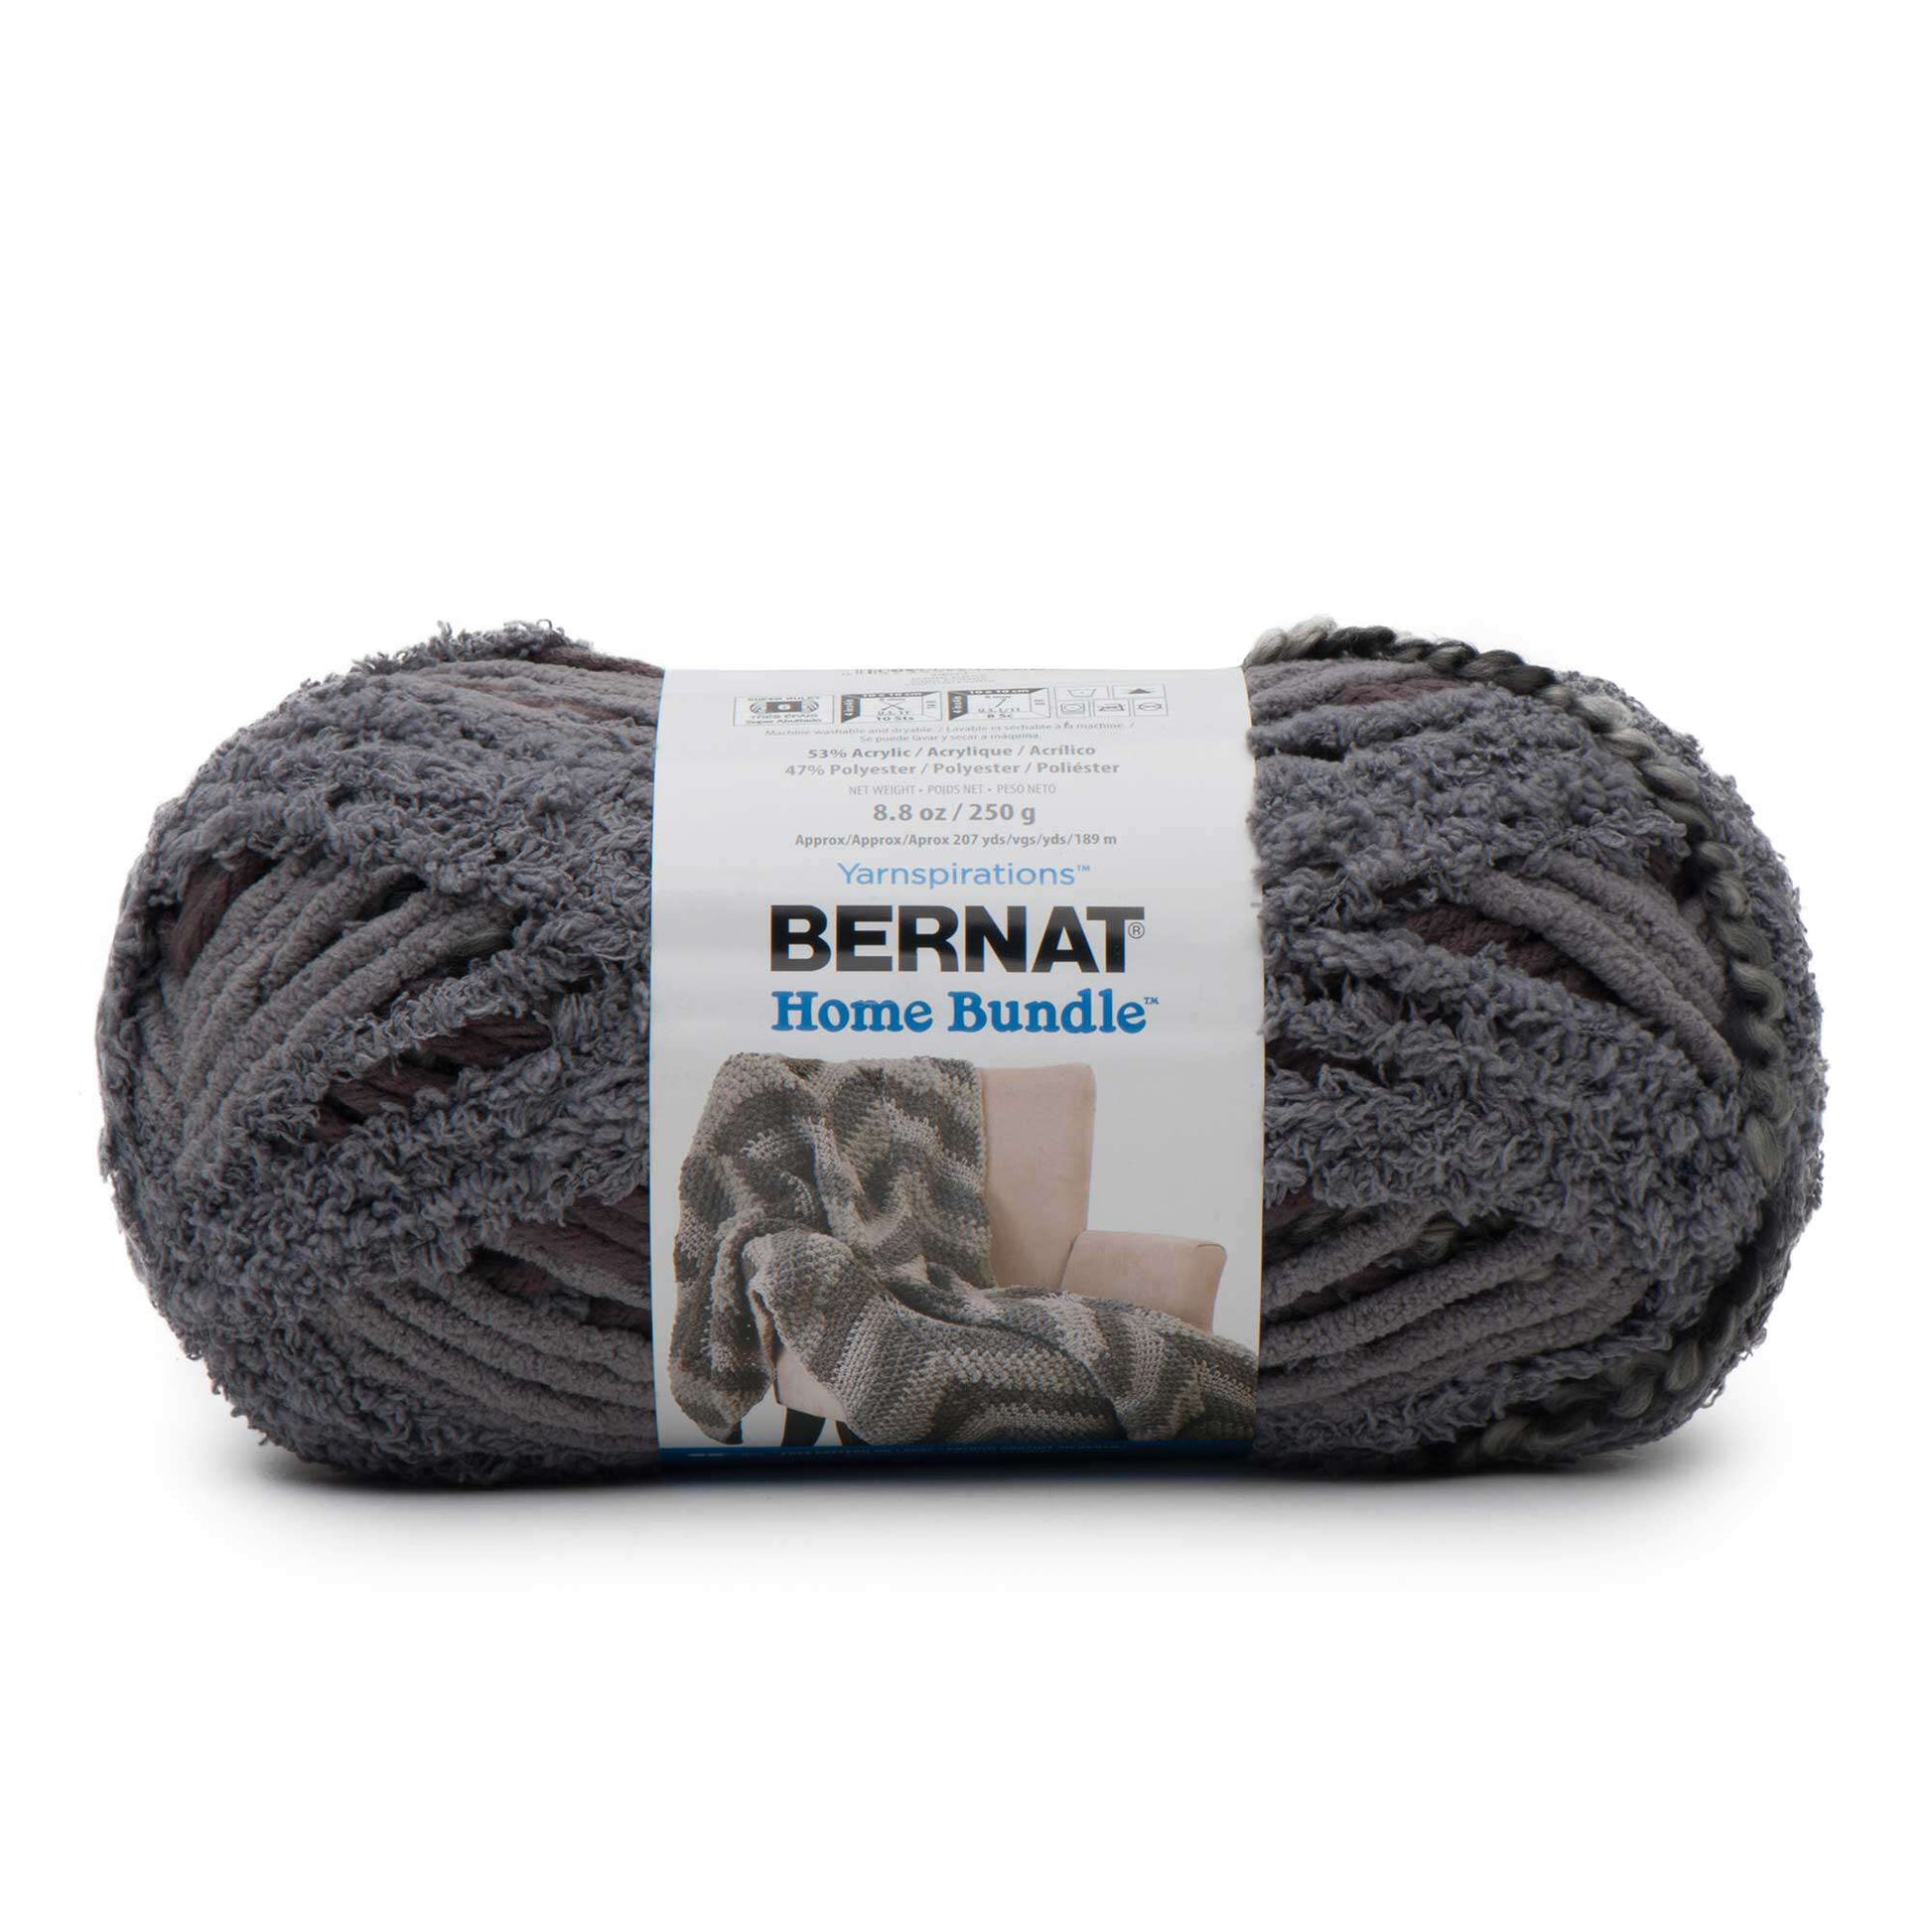 Bernat Home Bundle Yarn - Discontinued Shades